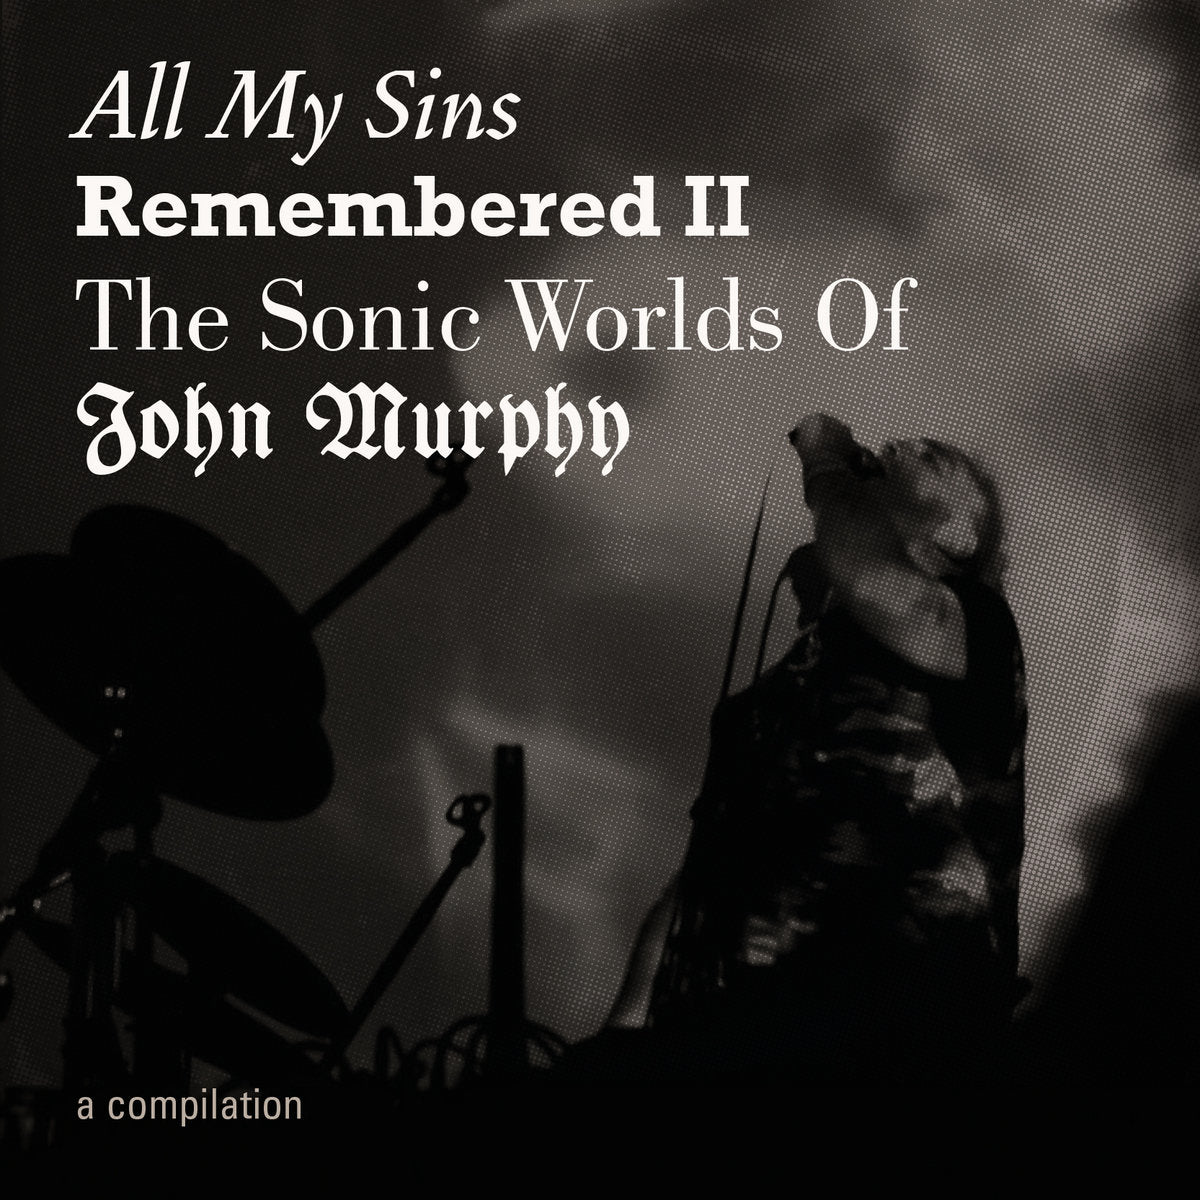 John Murphy - All My Sins Remembered II 2CD